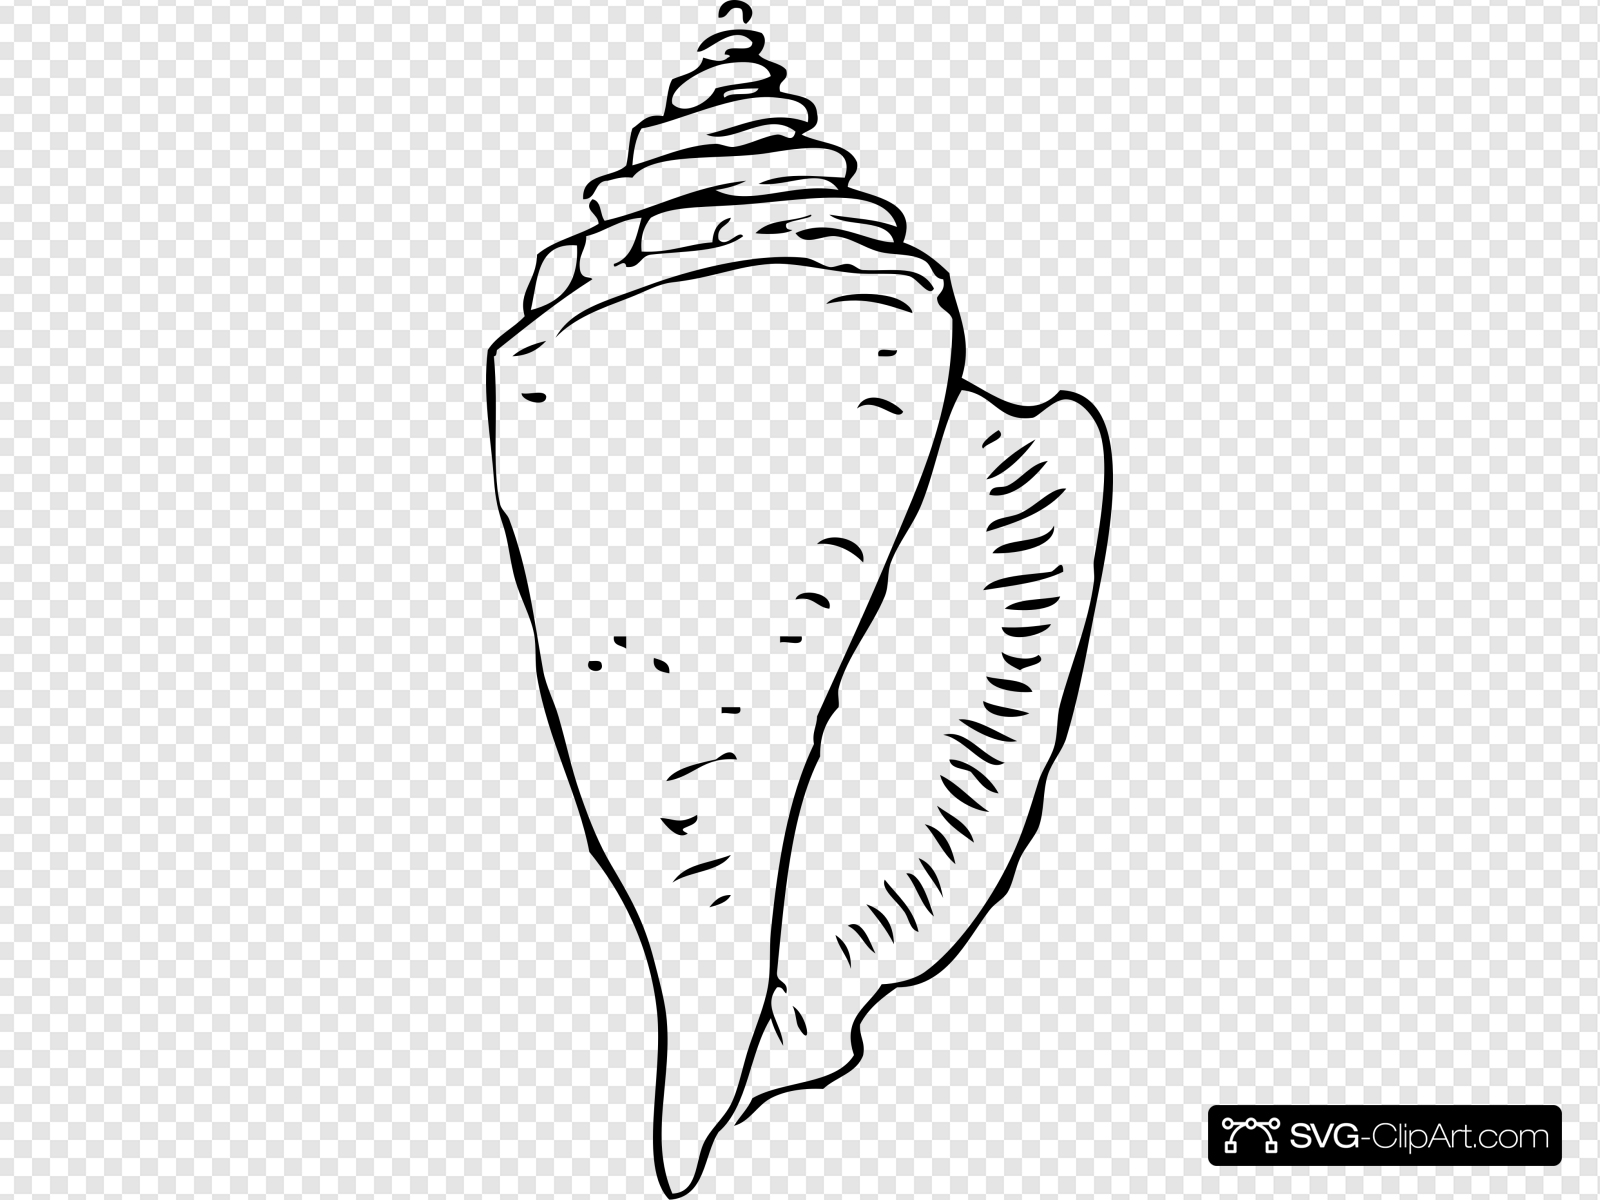 Seashell Clip art, Icon and SVG.